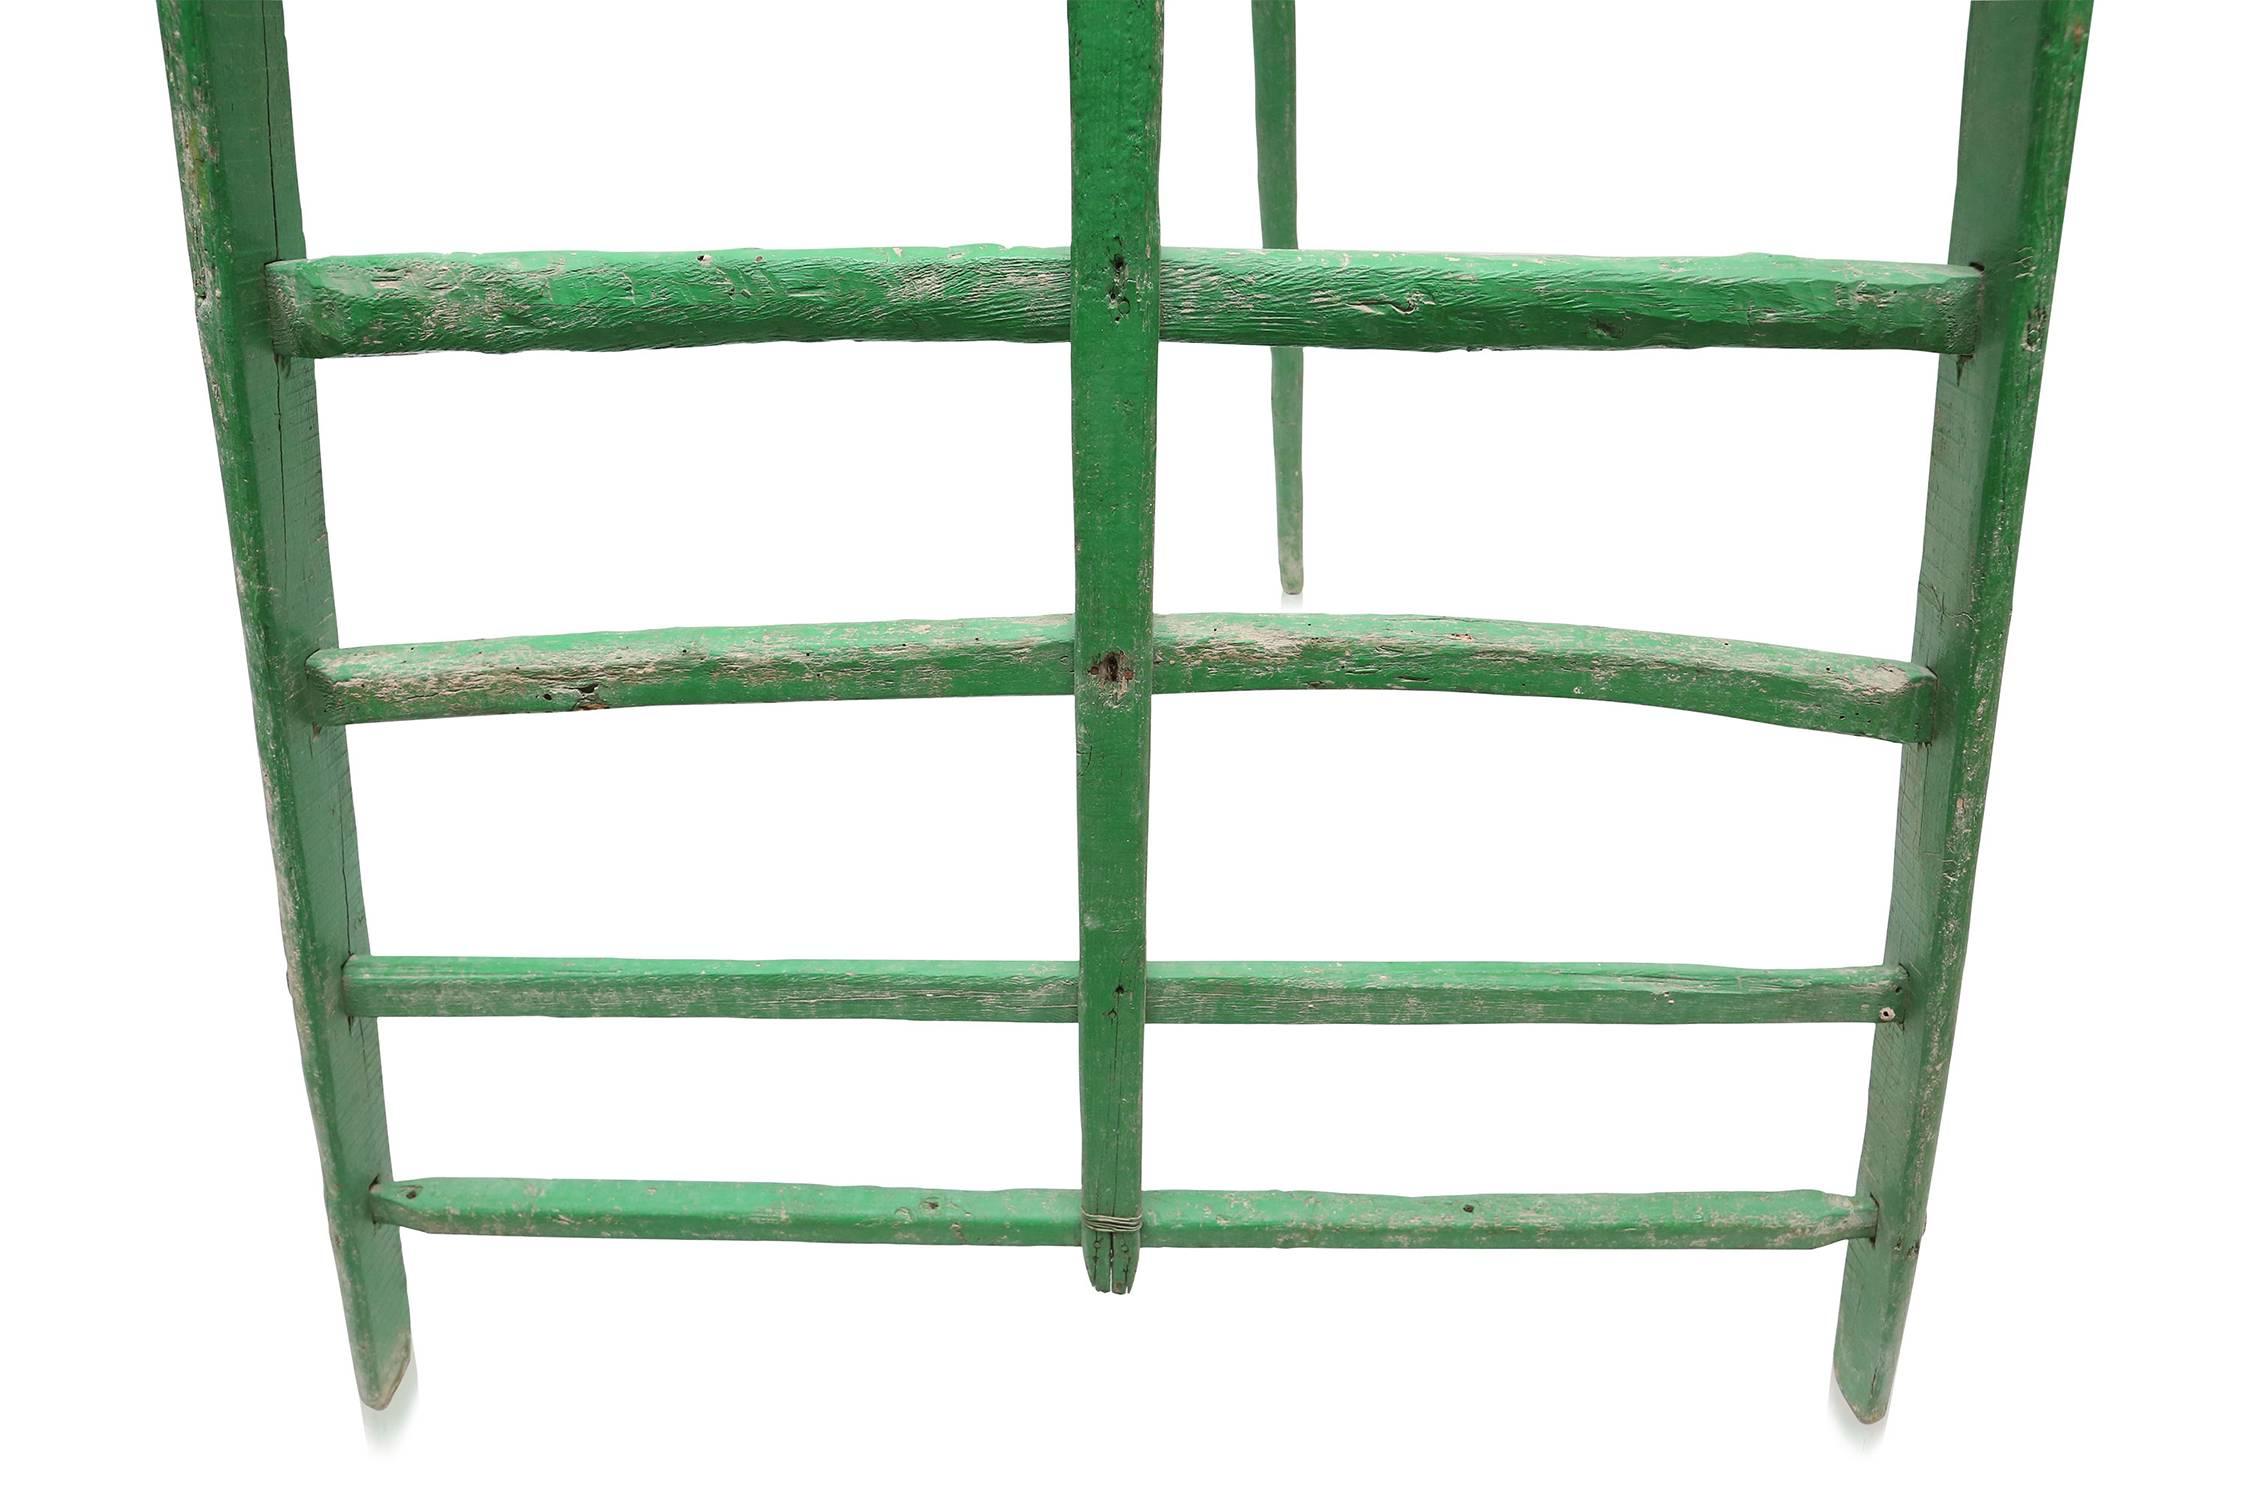 Green patina fruit ladder,
France, 19th century

'objet trouve´.'

Measures: H 293 cm, W 146 cm.
   